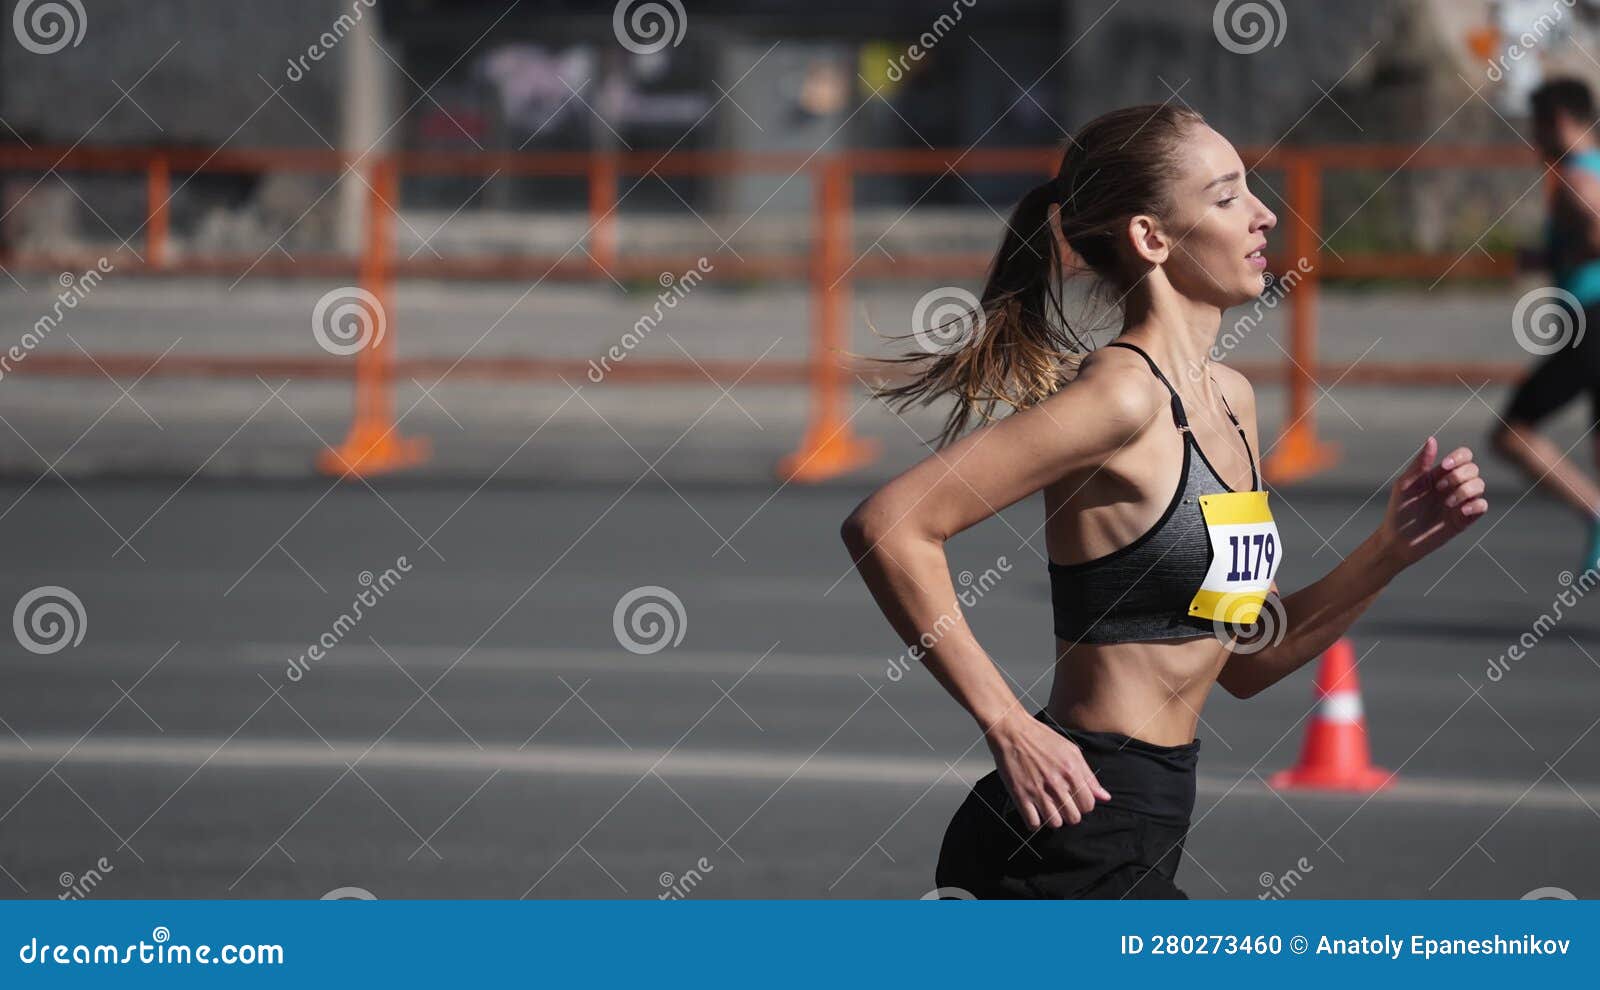 Maratona De Corrida Feminina. Mulher Campeã Atleta Superior Homens